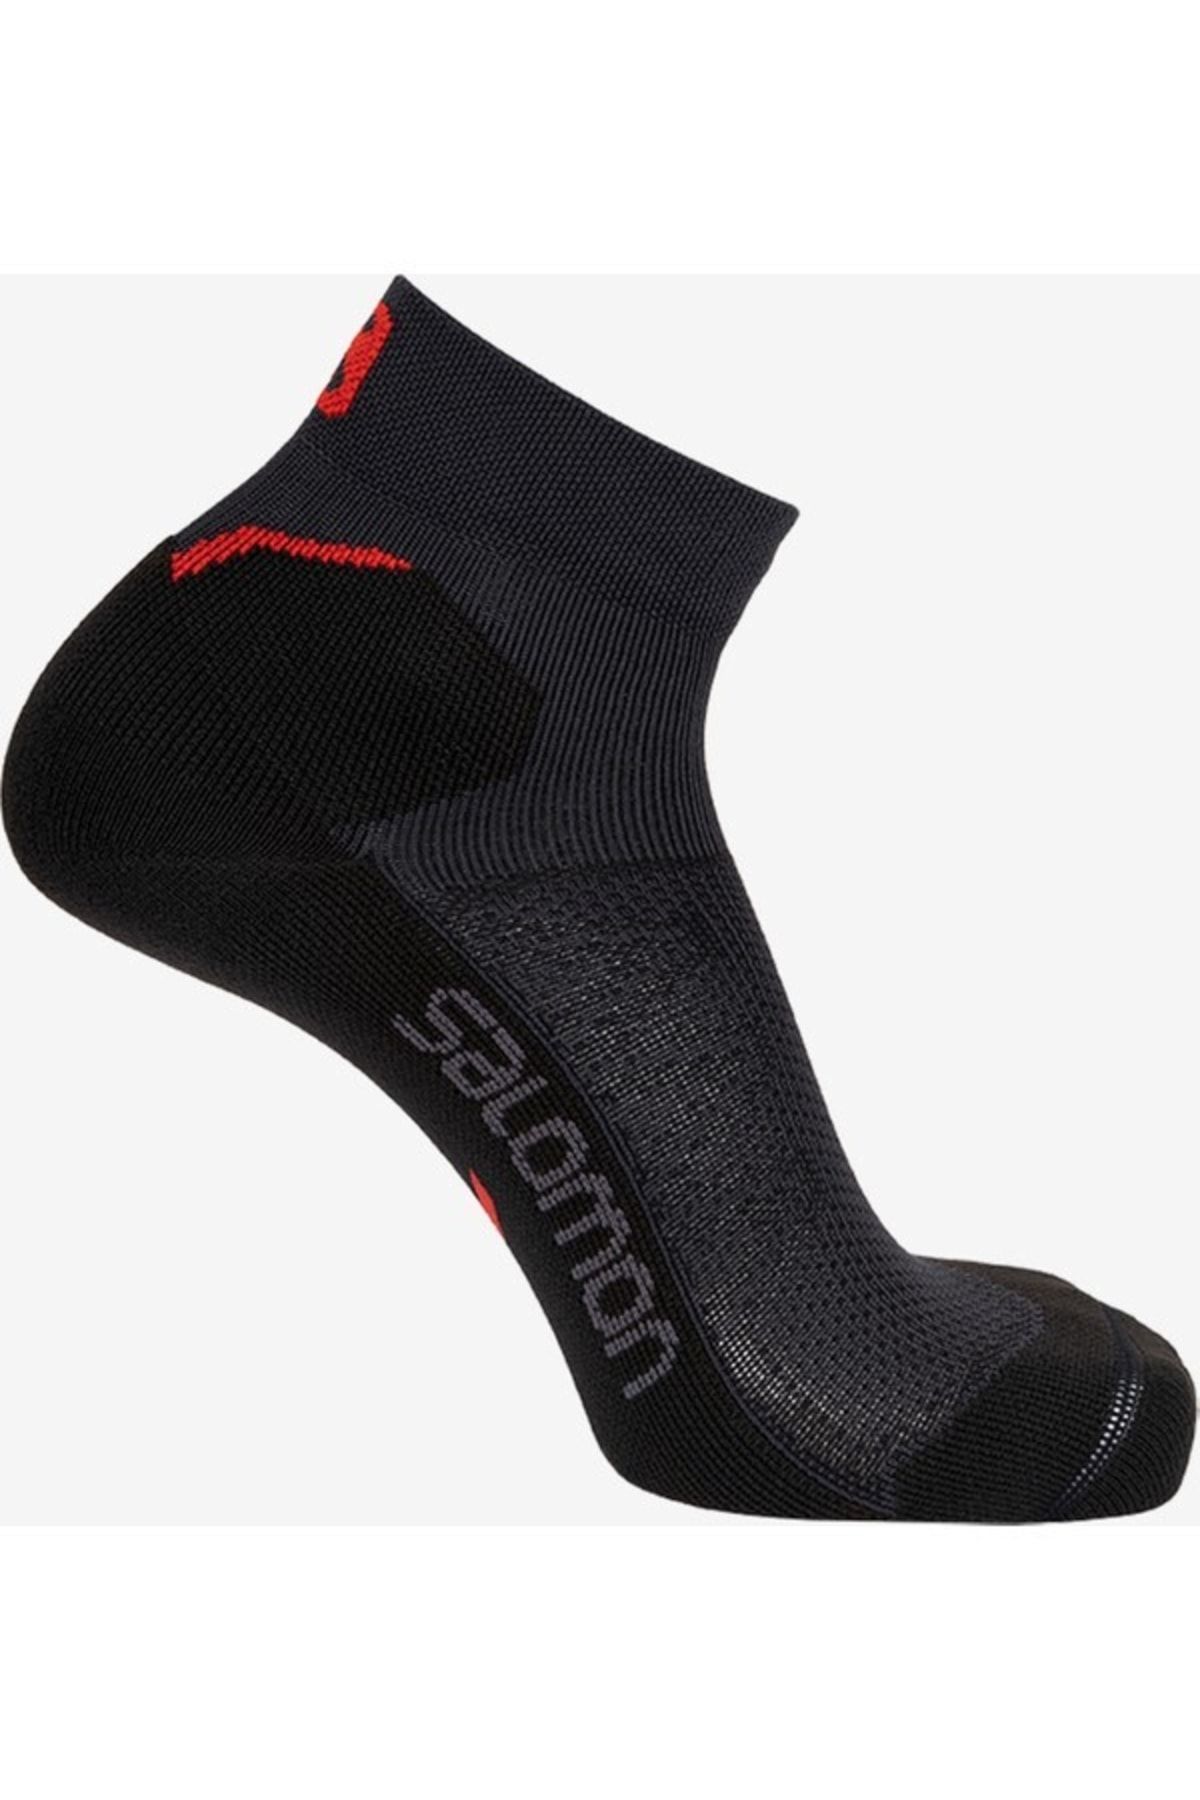 Salomon Speedcross Ankle Dx+sx